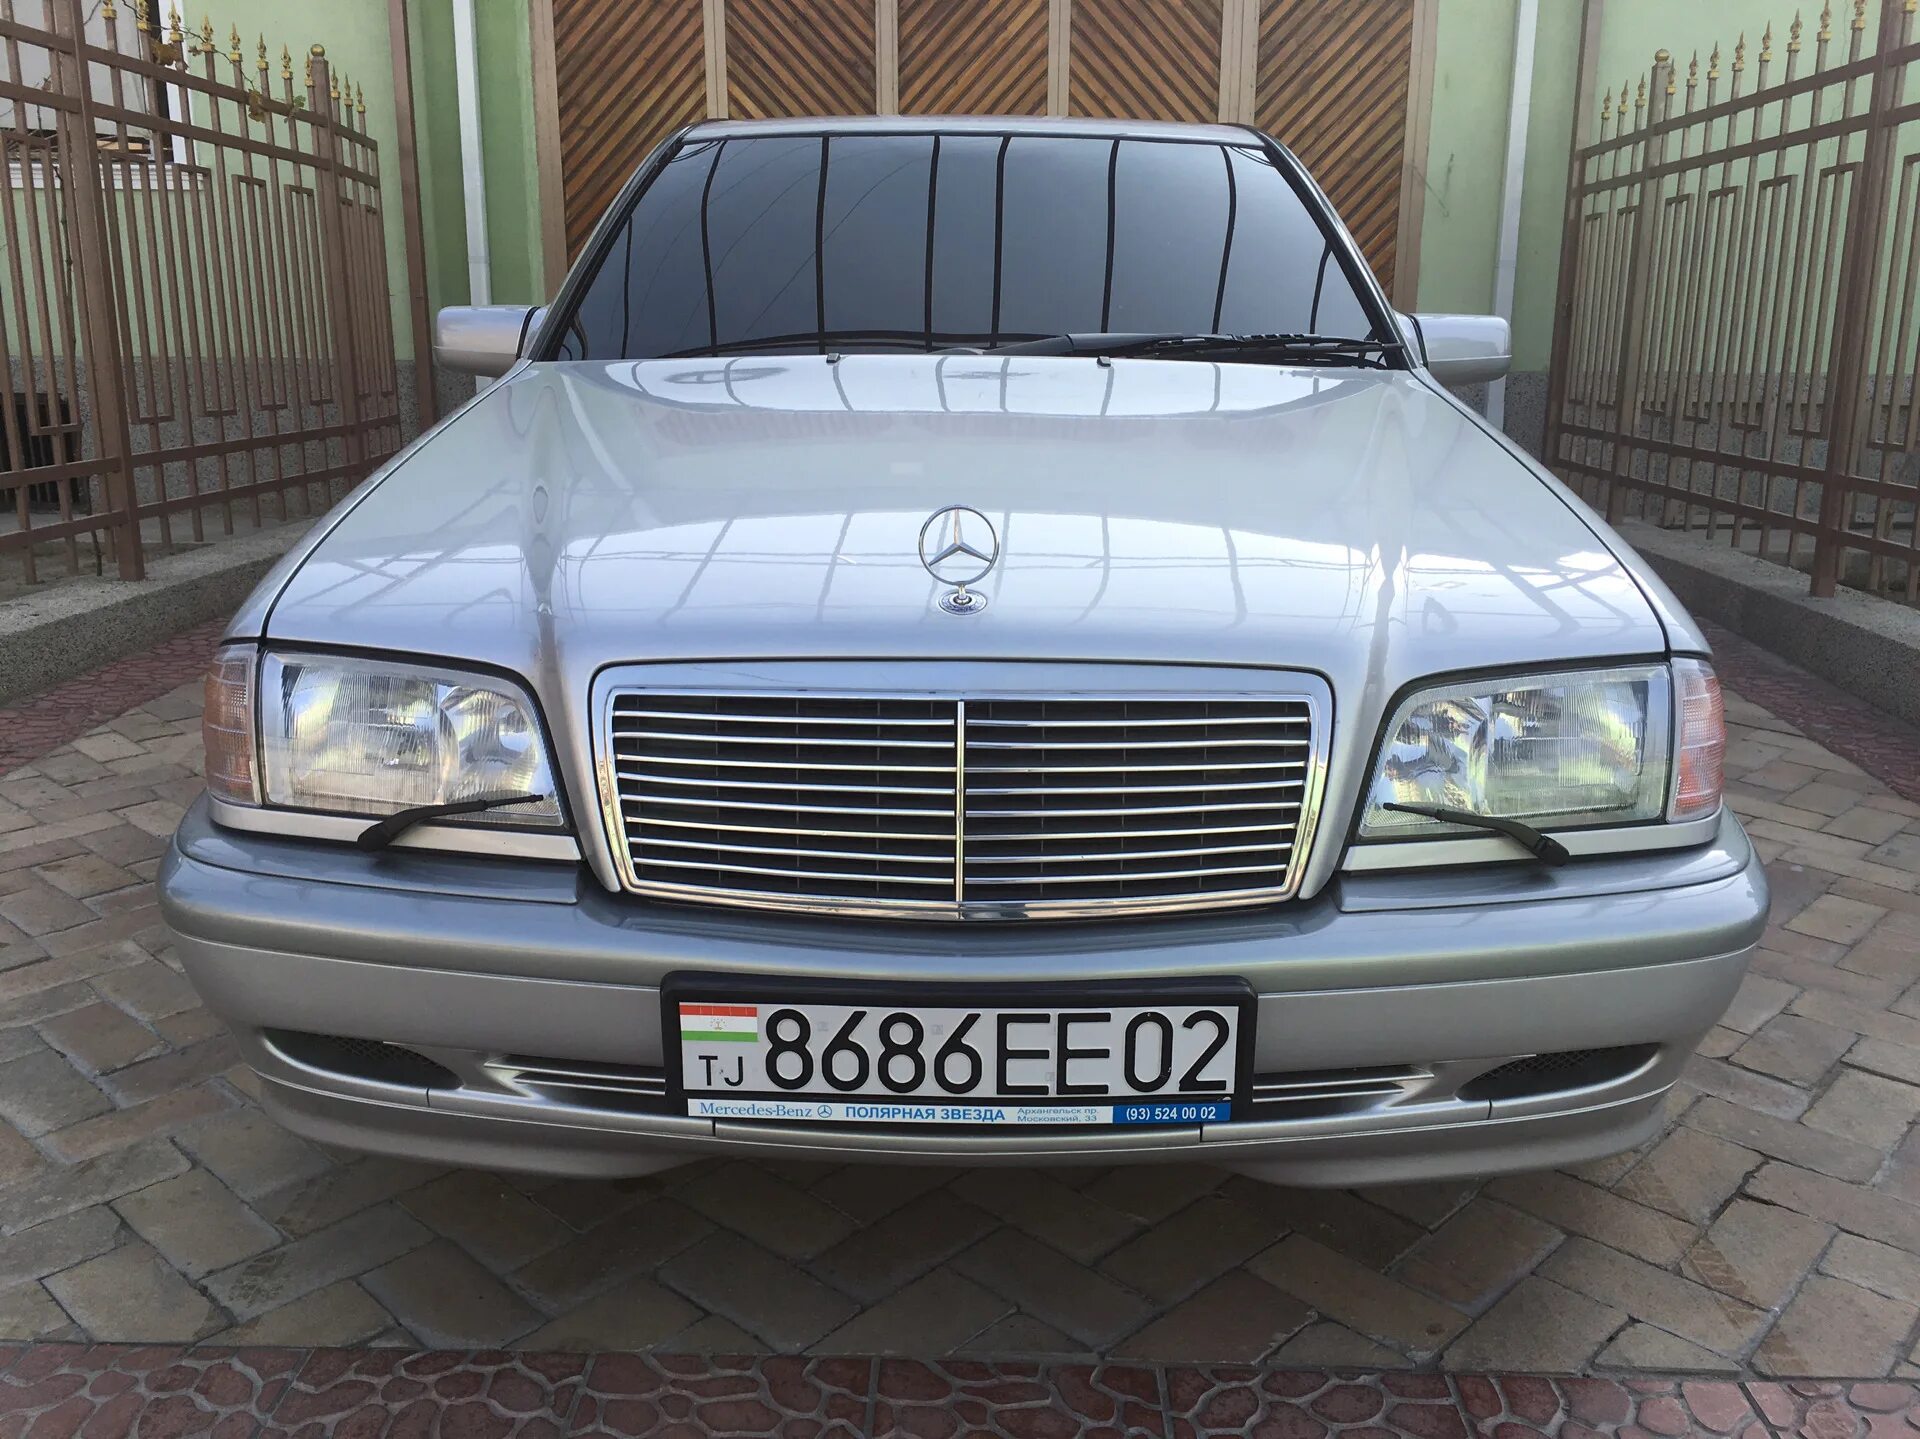 Мерседес сечка Худжанд. Mercedes Benz w202 1999 Таджикистан. Мерседес сечка в Таджикистан. Мерседес Бенц 202 в Таджикистан.